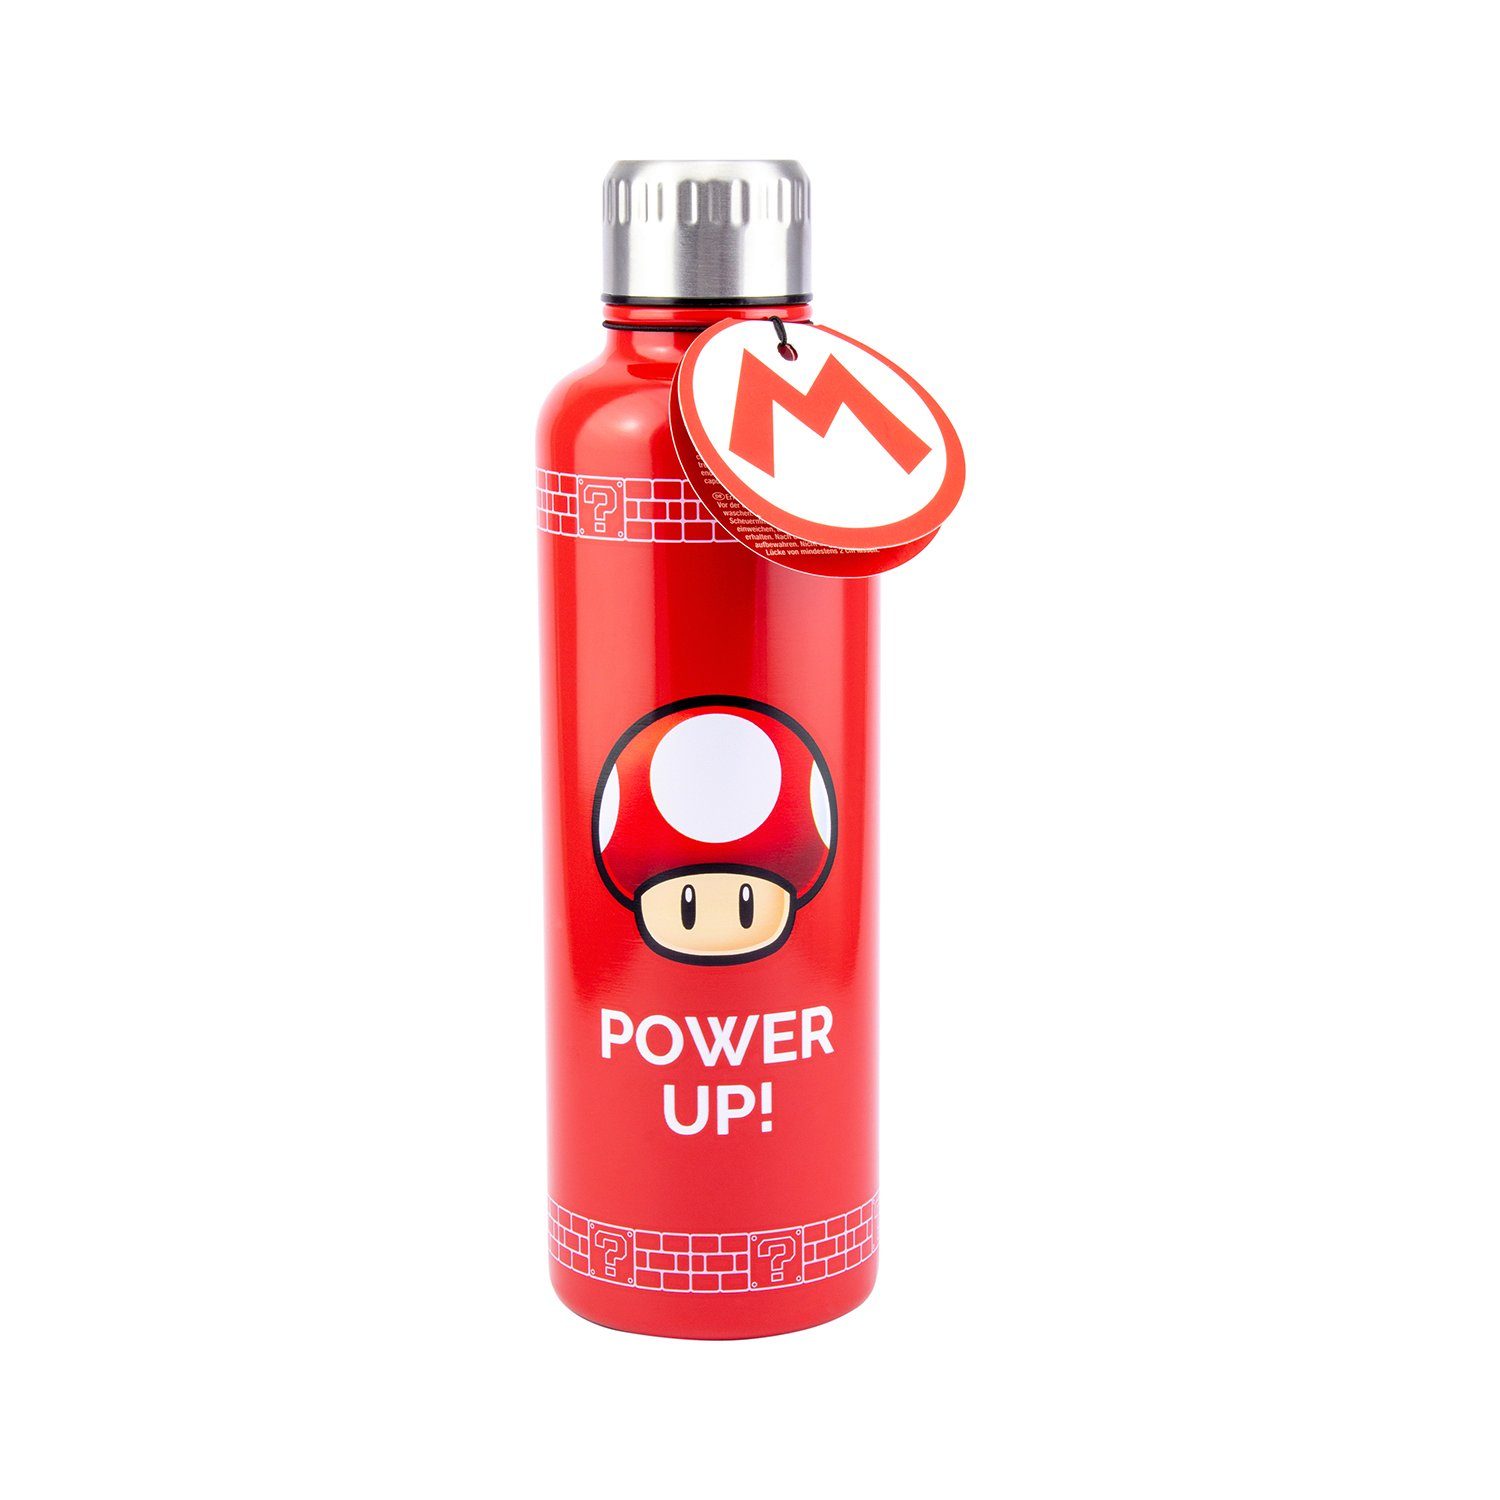 Up! Super flasche Backform Paladone Power Metall Mario Trink